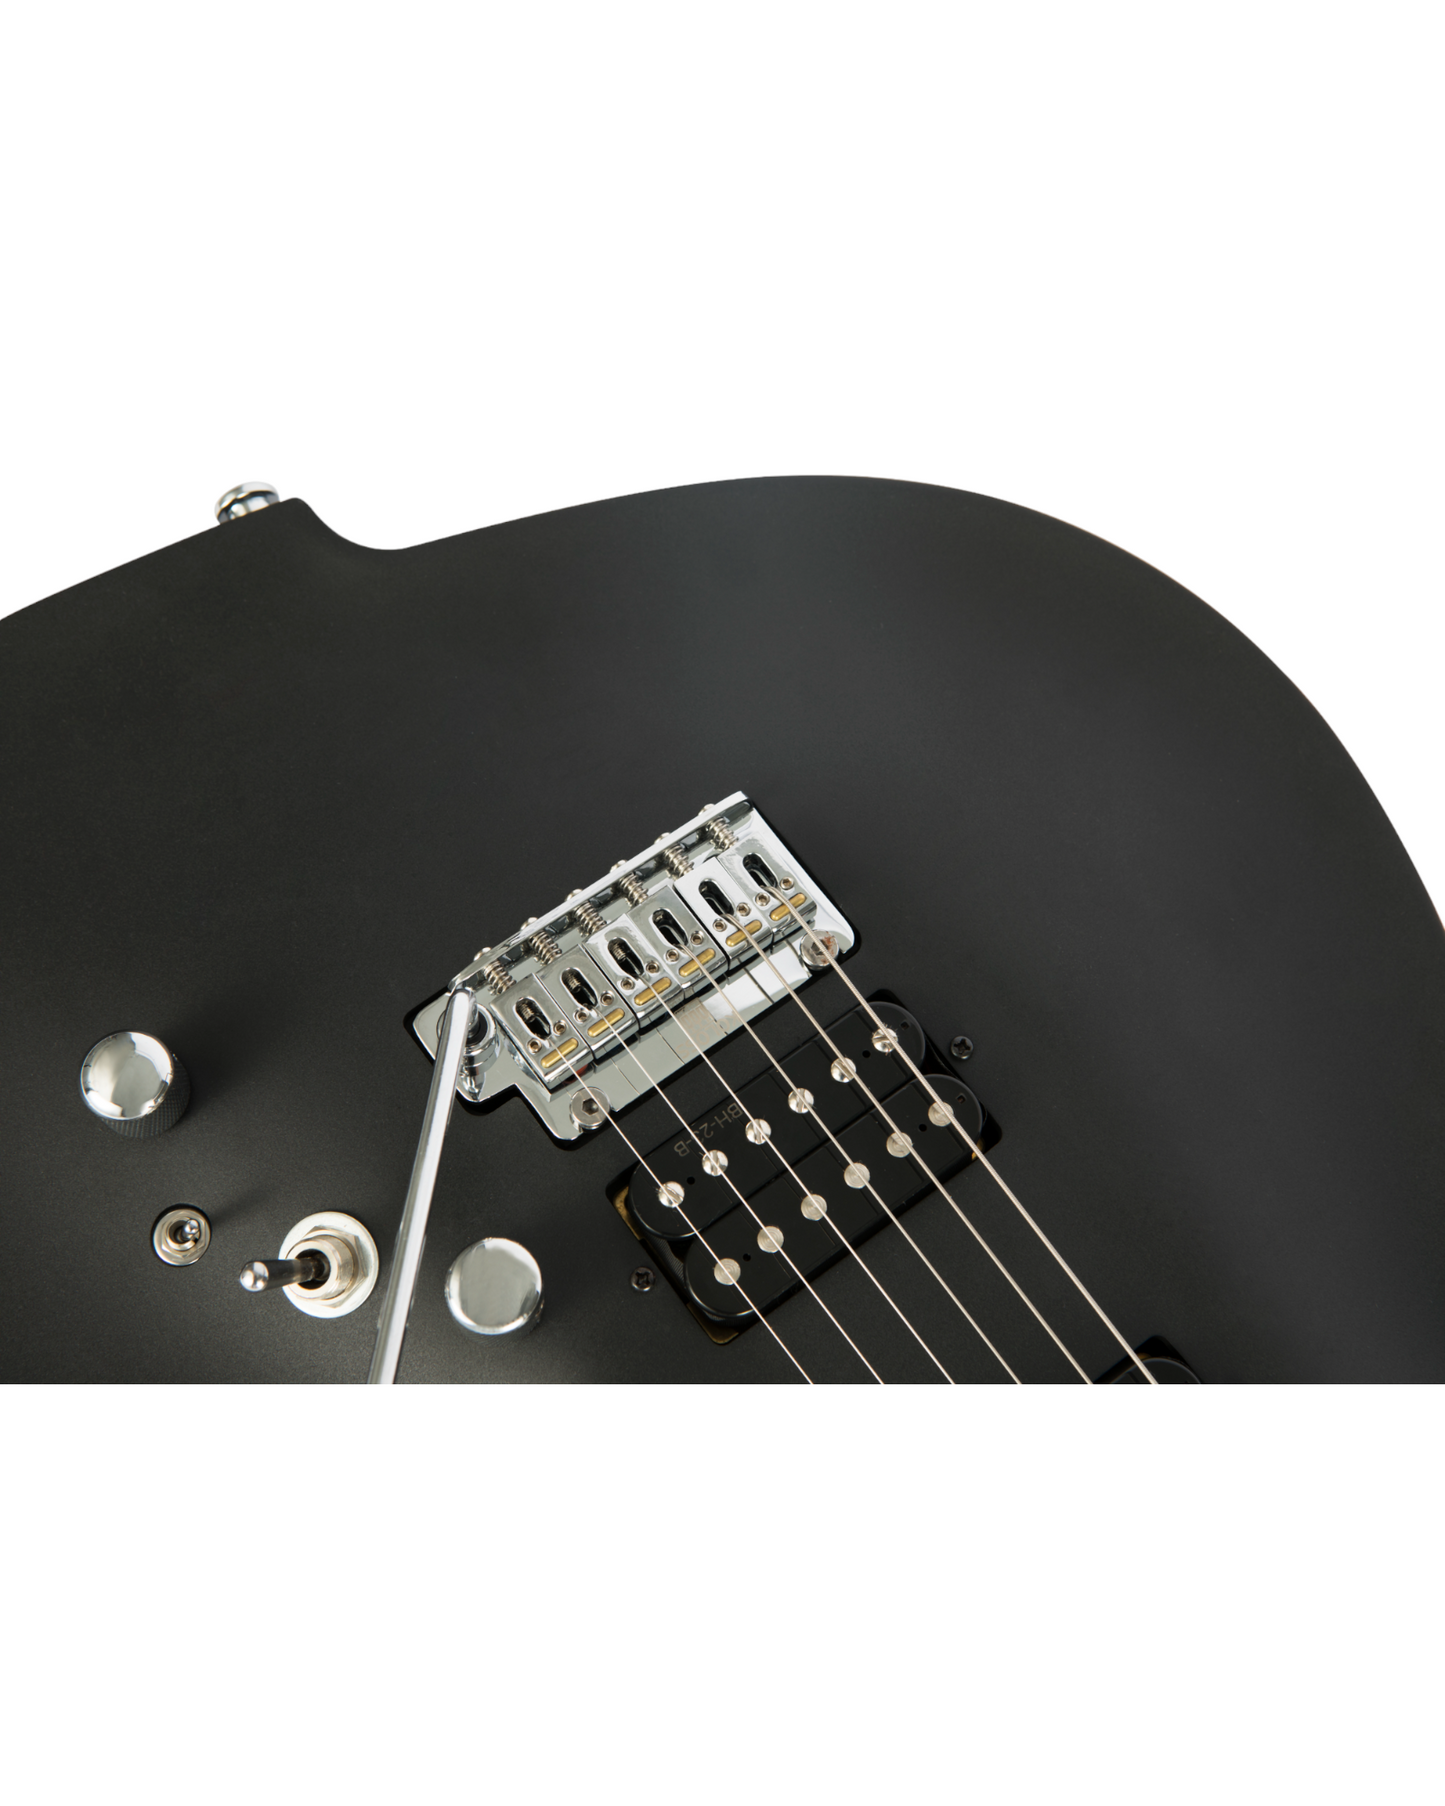 KOLOSS GT45P Aluminum Body Roasted Maple Neck Electric Guitar + Bag